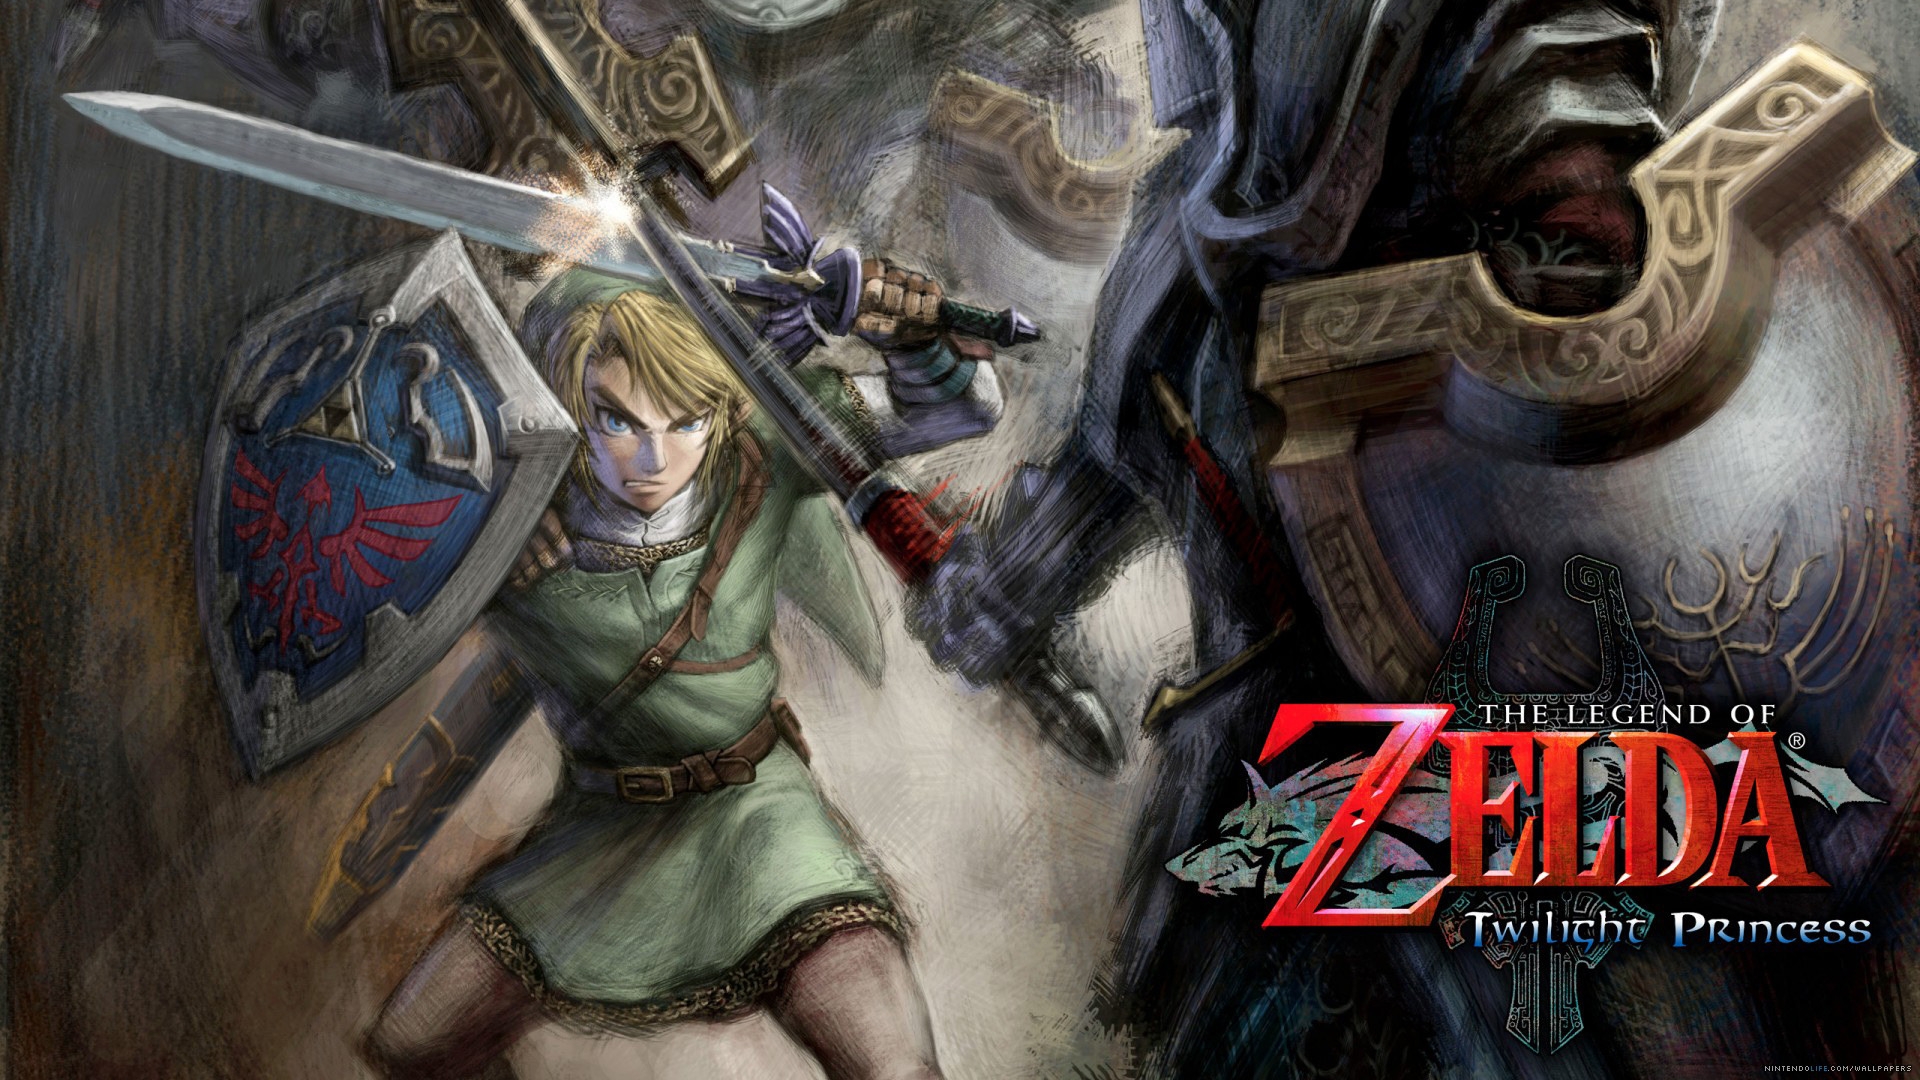 The Legend of Zelda Twilight Princess for 1920 x 1080 HDTV 1080p resolution